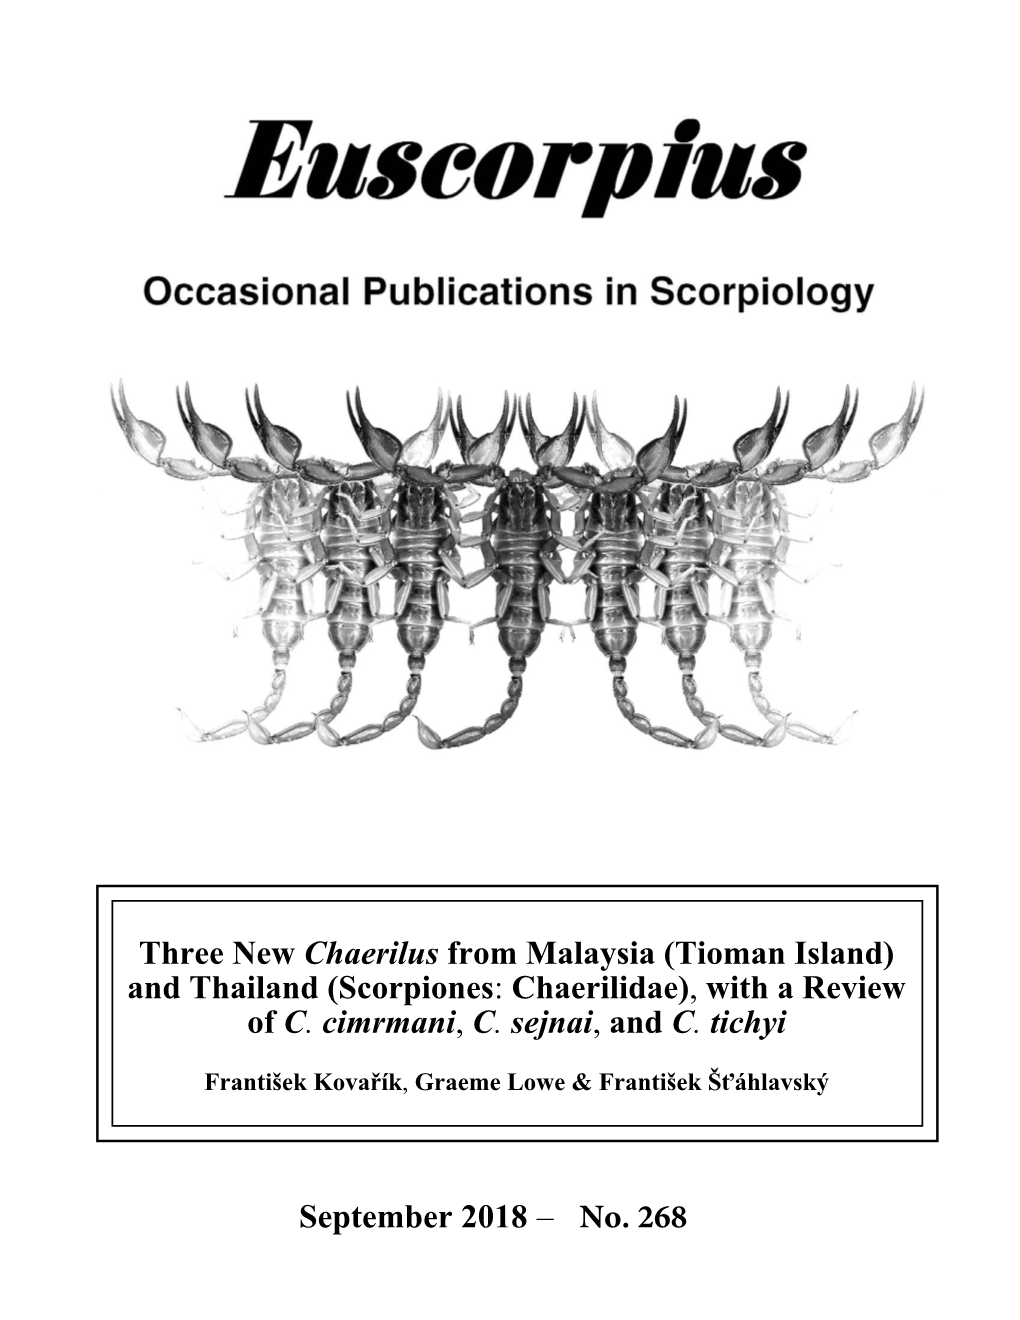 Three New Chaerilus from Malaysia (Tioman Island) and Thailand (Scorpiones: Chaerilidae), with a Review of C. Cimrmani, C. Sejnai, and C